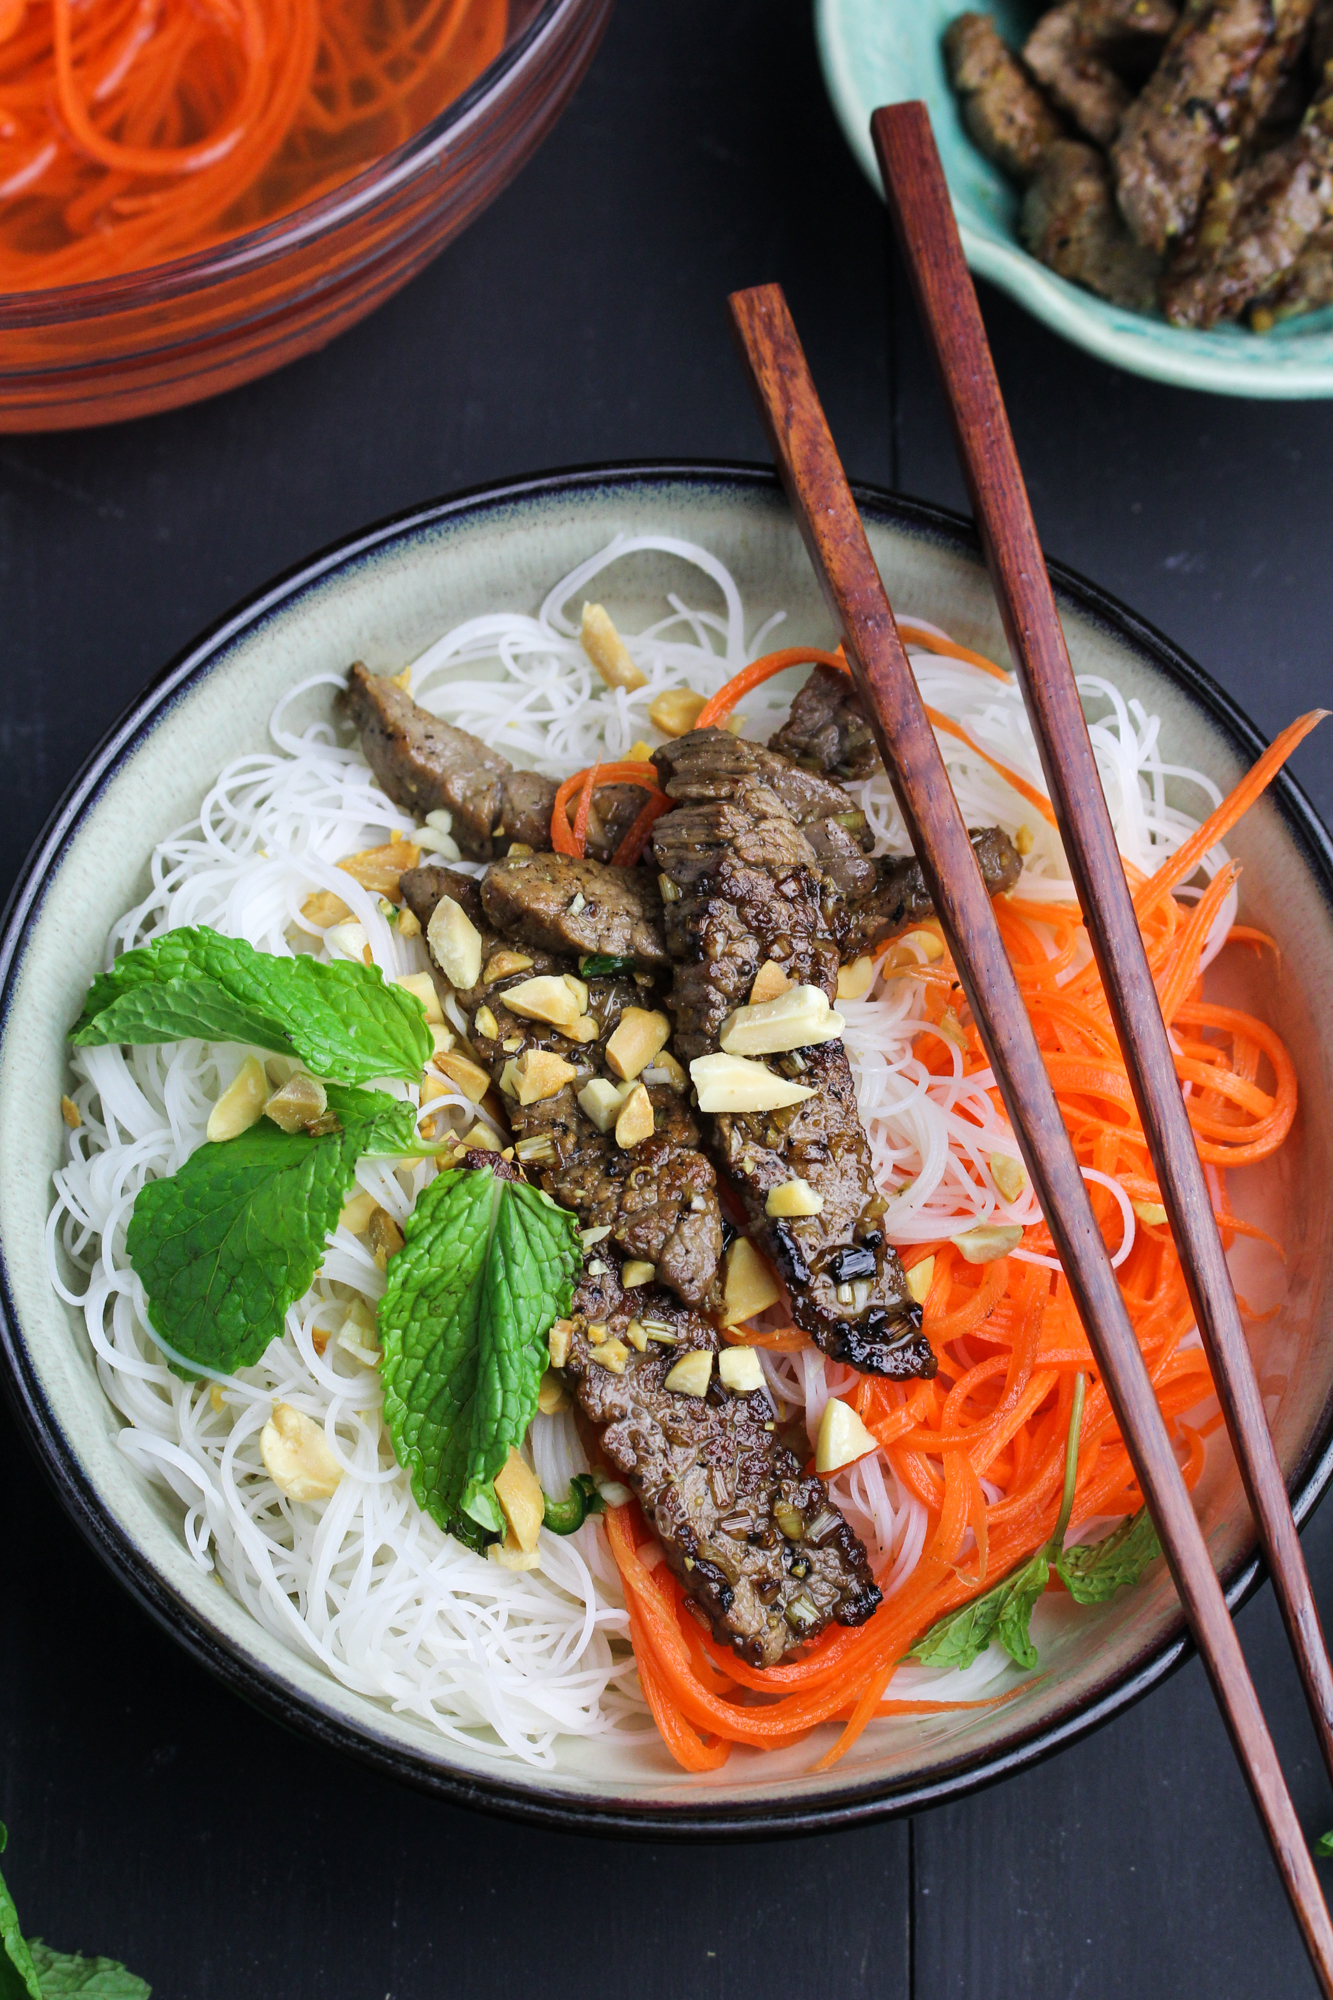 Bún Bò Xào - Vietnamese Rice Noodle Salad with Lemongrass Beef